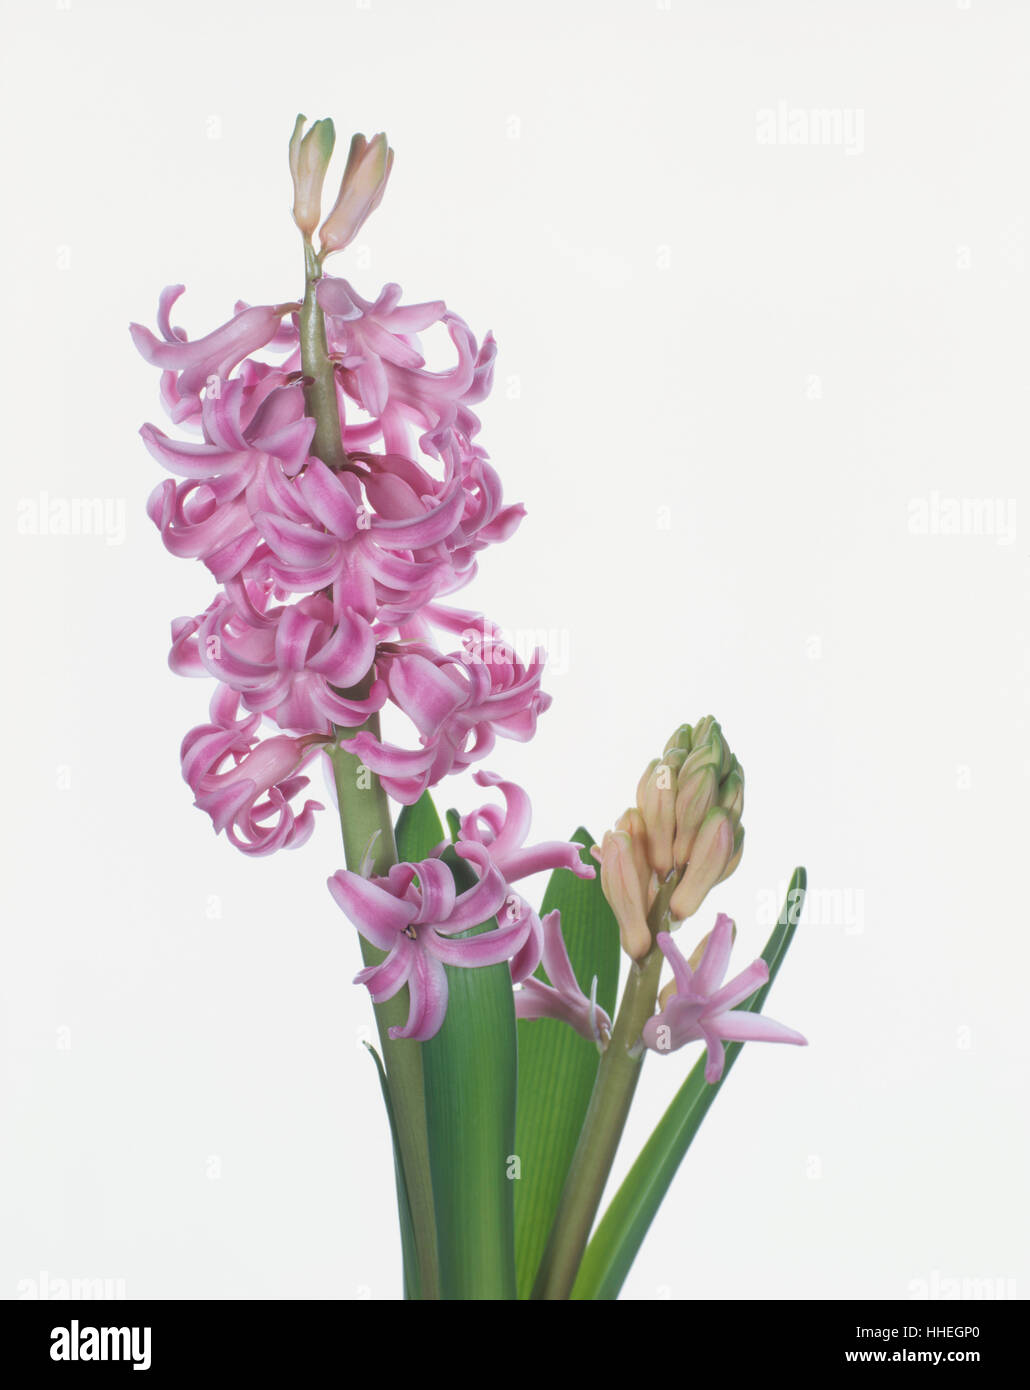 Blossoms of Hyacinth (Hyacinthus) Stock Photo